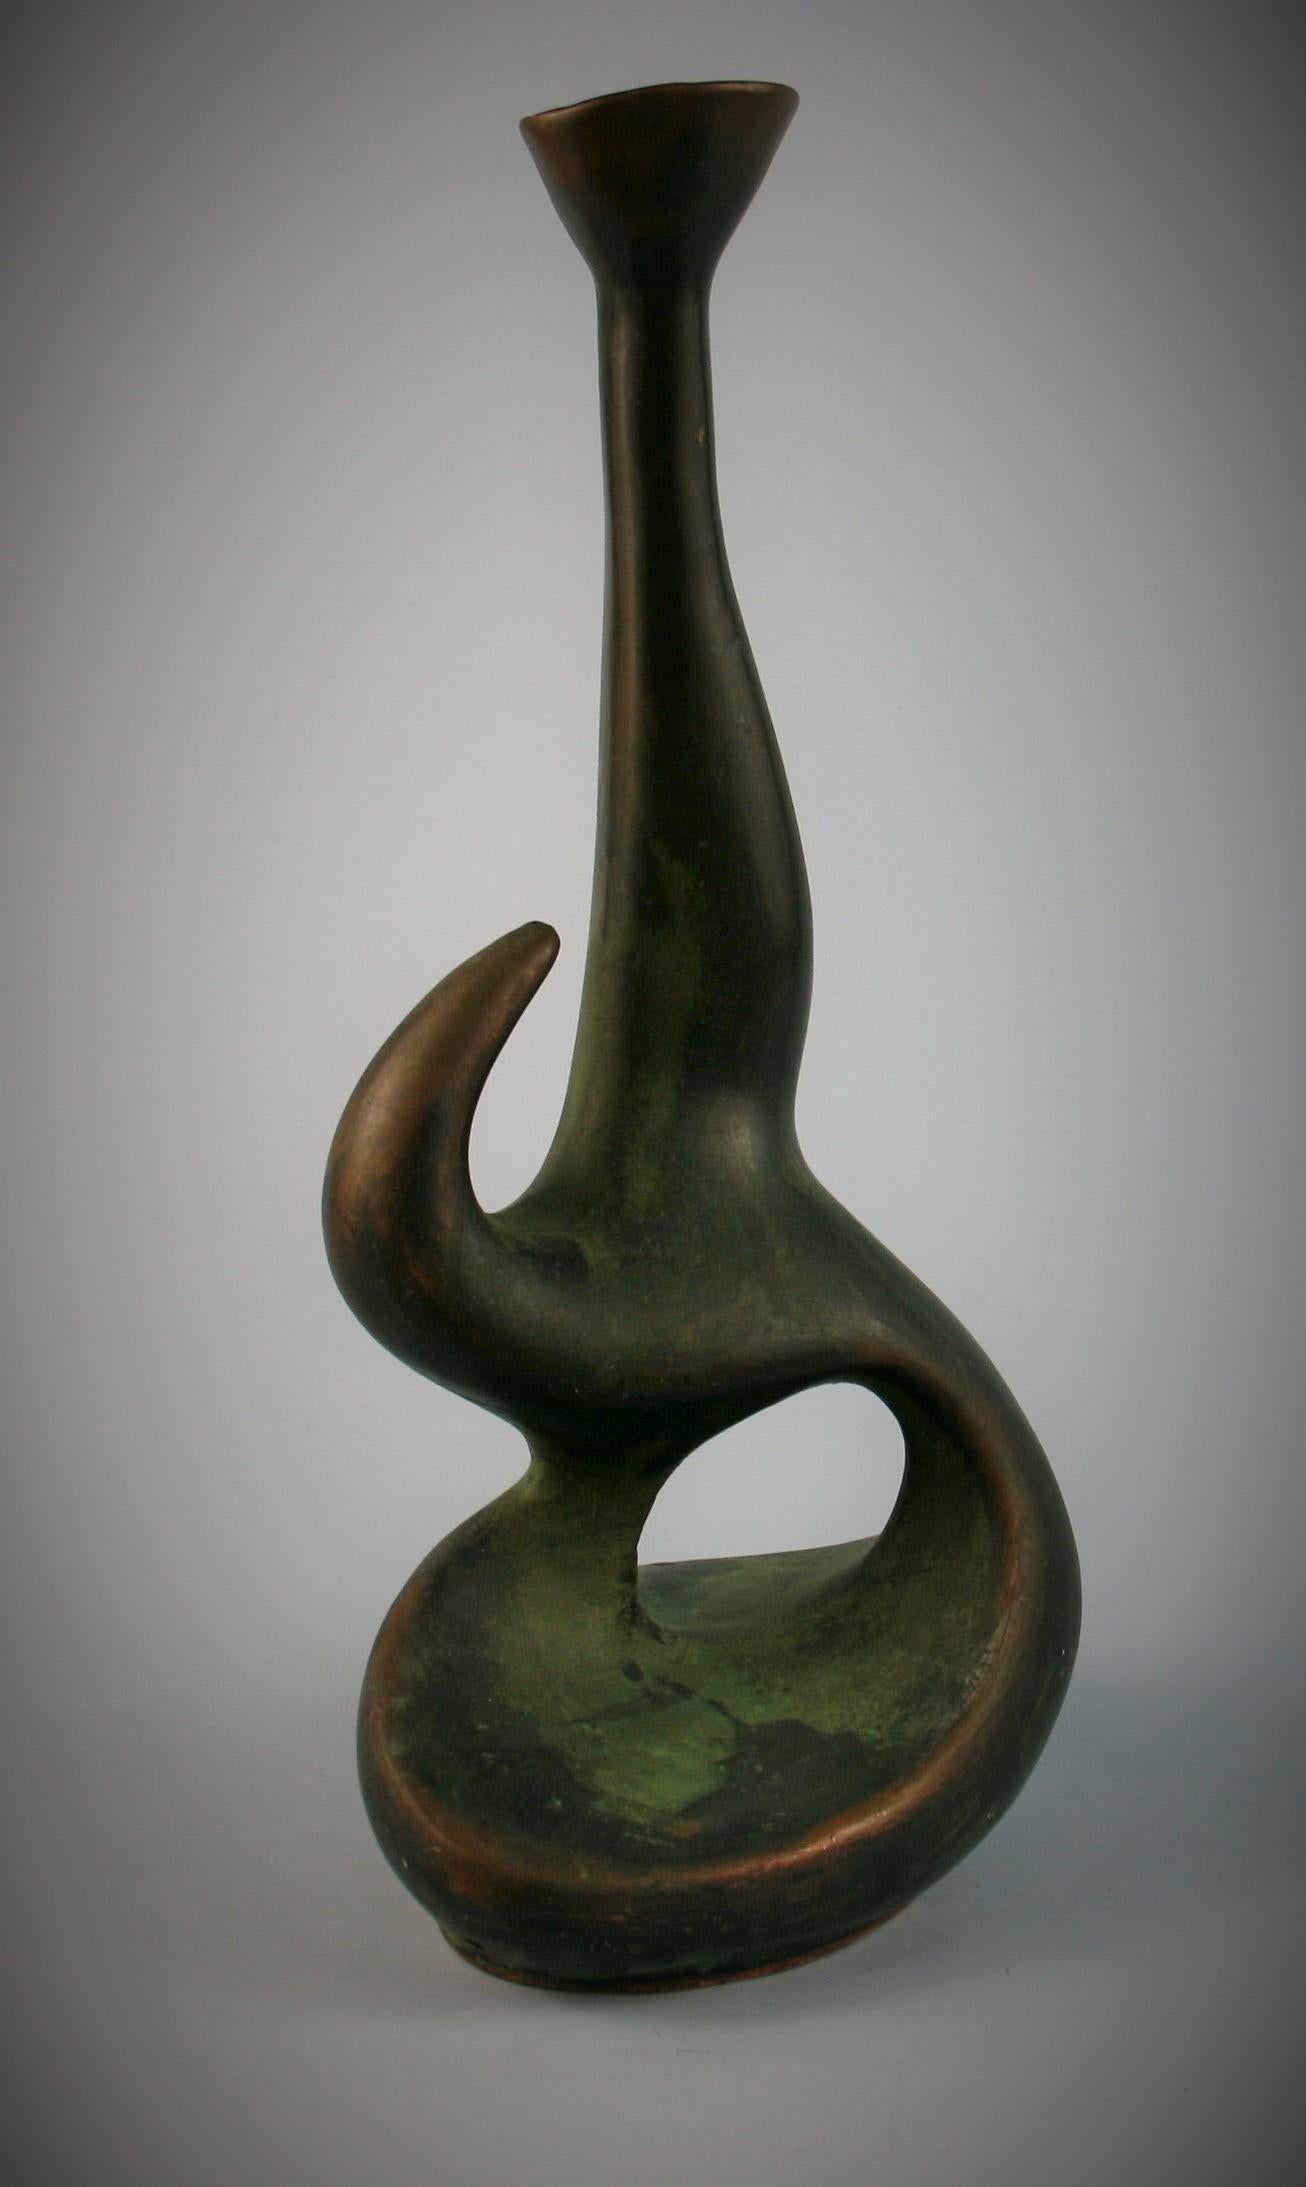 3-613 Japanische kupferüberzogene Keramikknospenvase/Skulptur
Vase aus Keramik, überzogen mit geschmolzenem Kupfer.